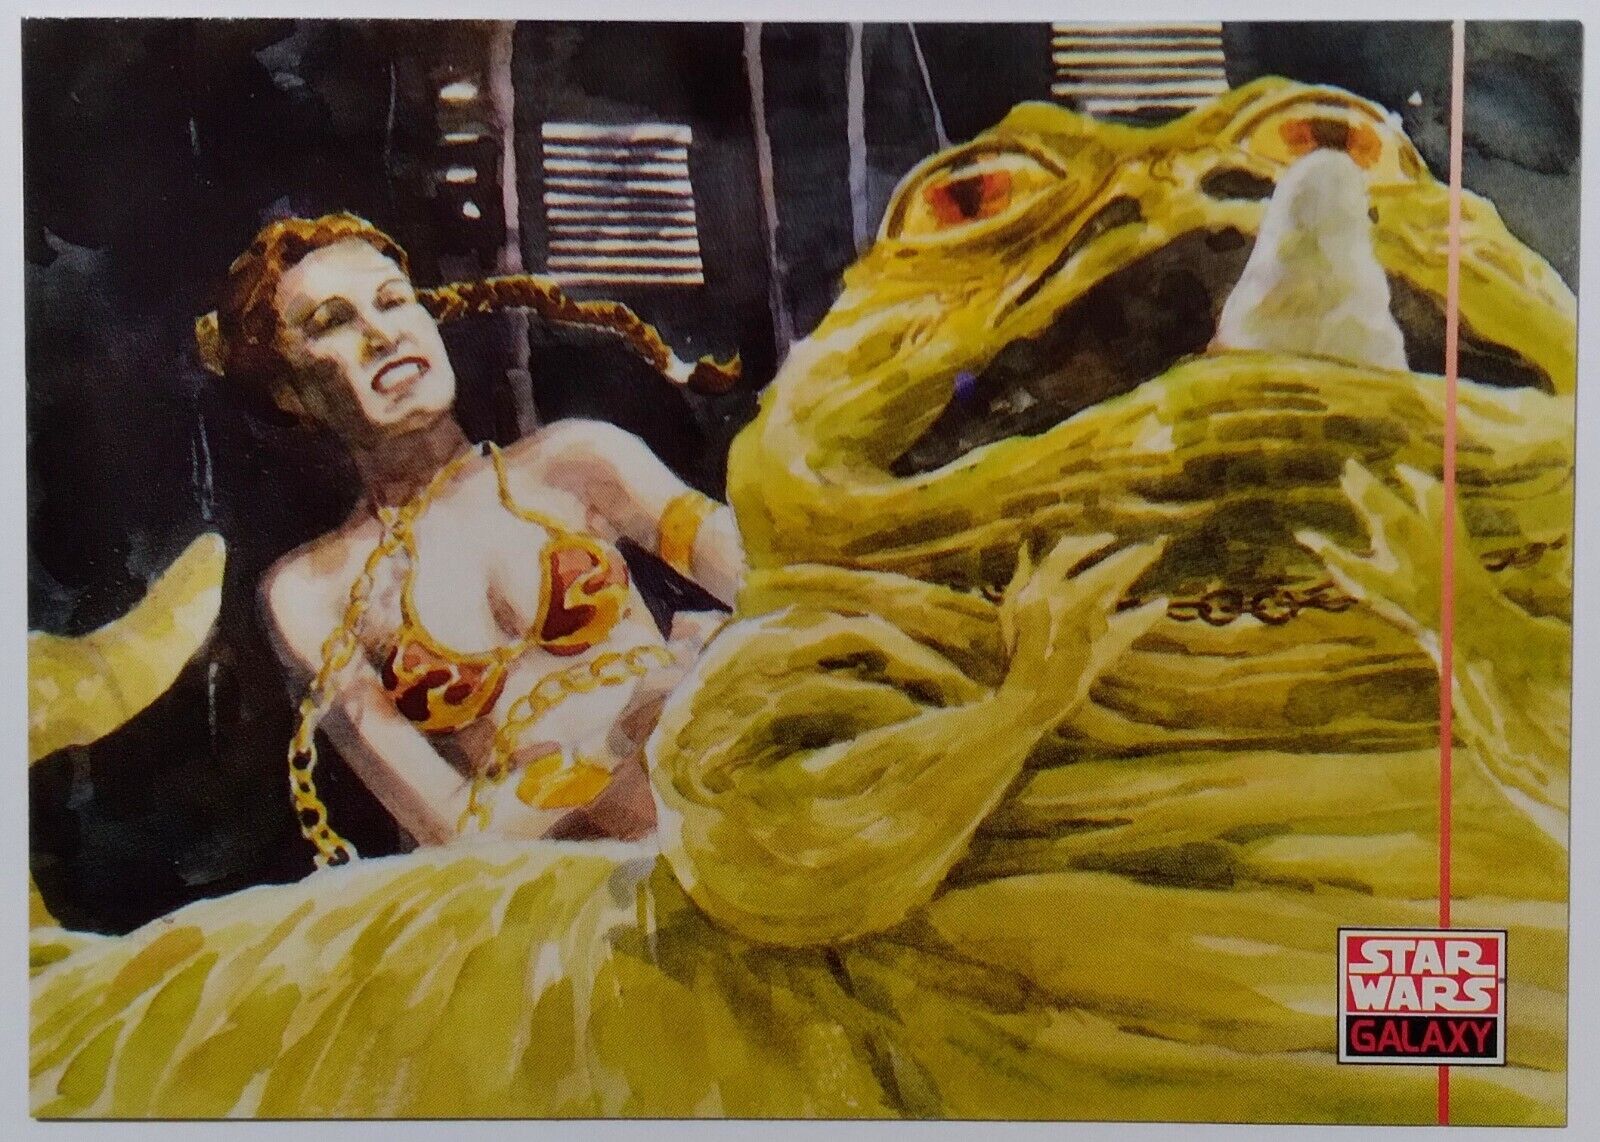 1994 Topps Star Wars Galaxy Series 2 Slave Princess Leia #270